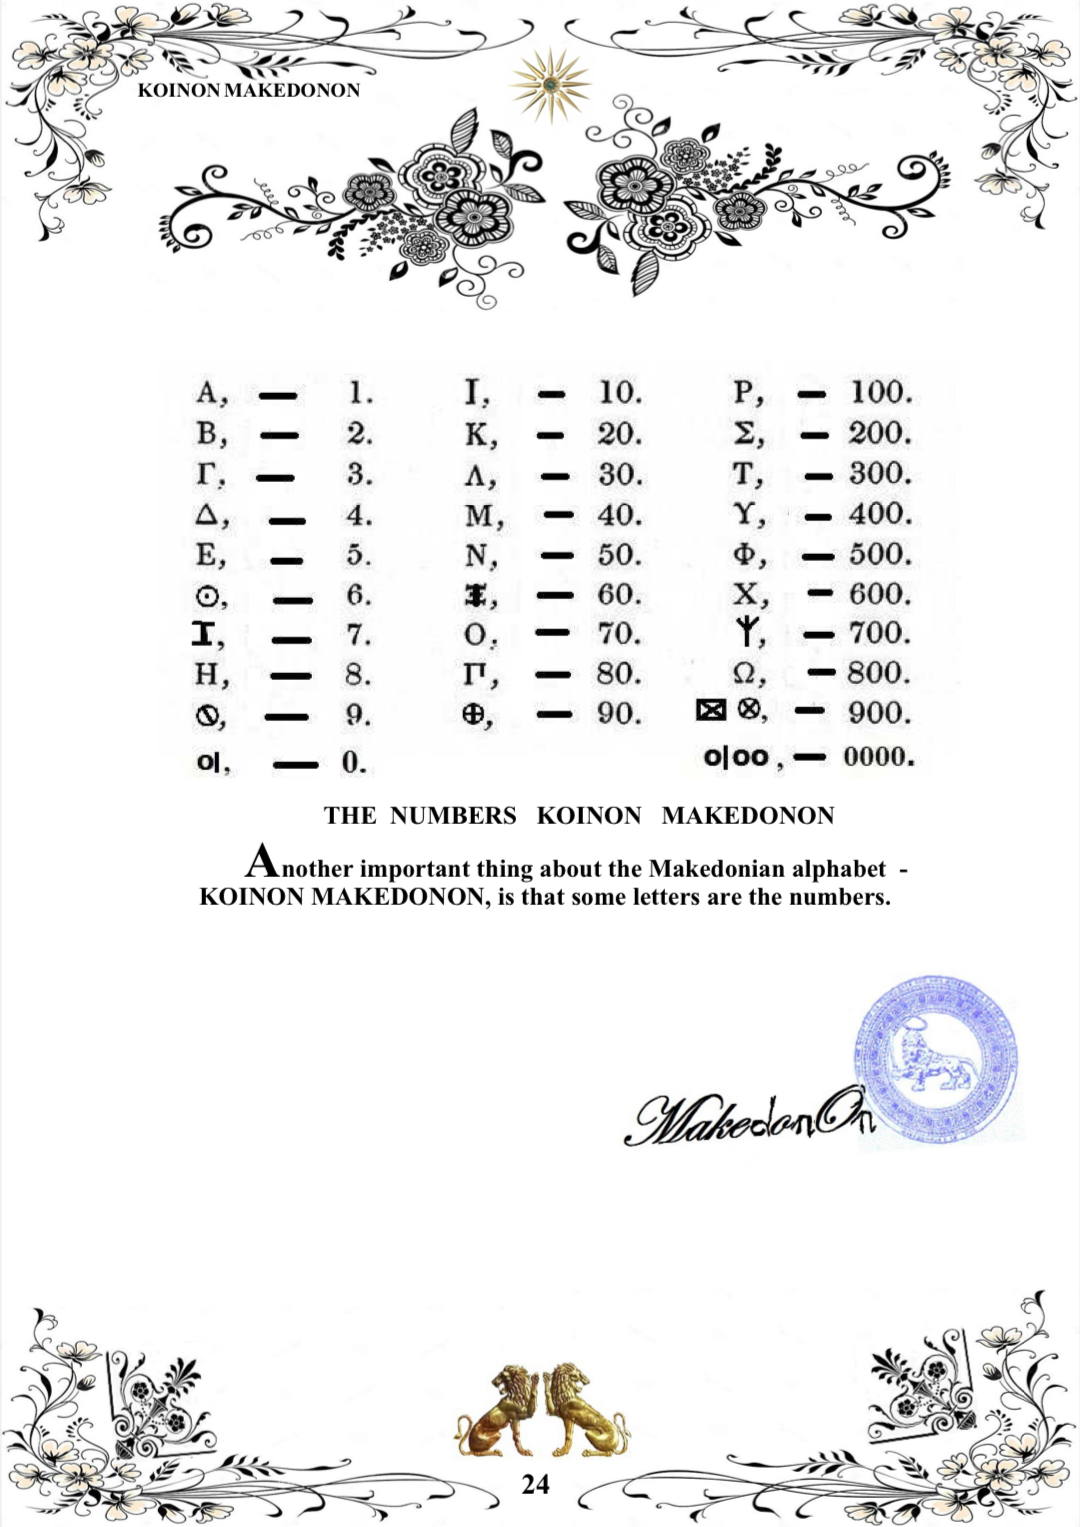 The Makedonian Alphabet KOINON MAKEDONON